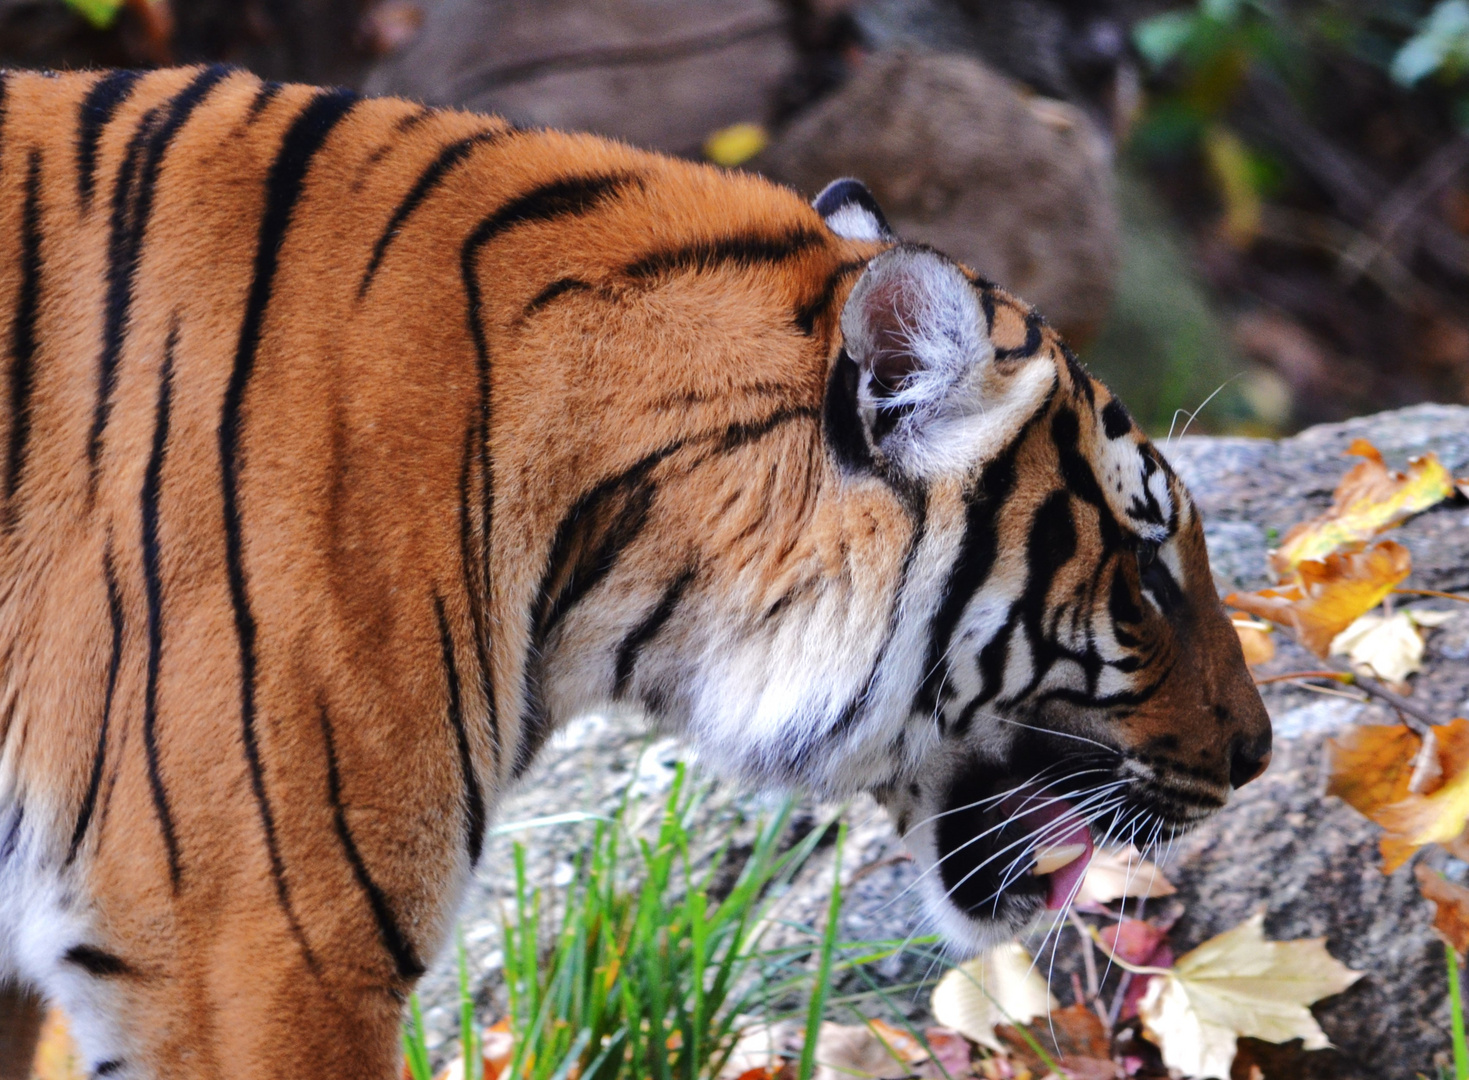 Hinterindischer Tiger, Panthera tigris corbetti